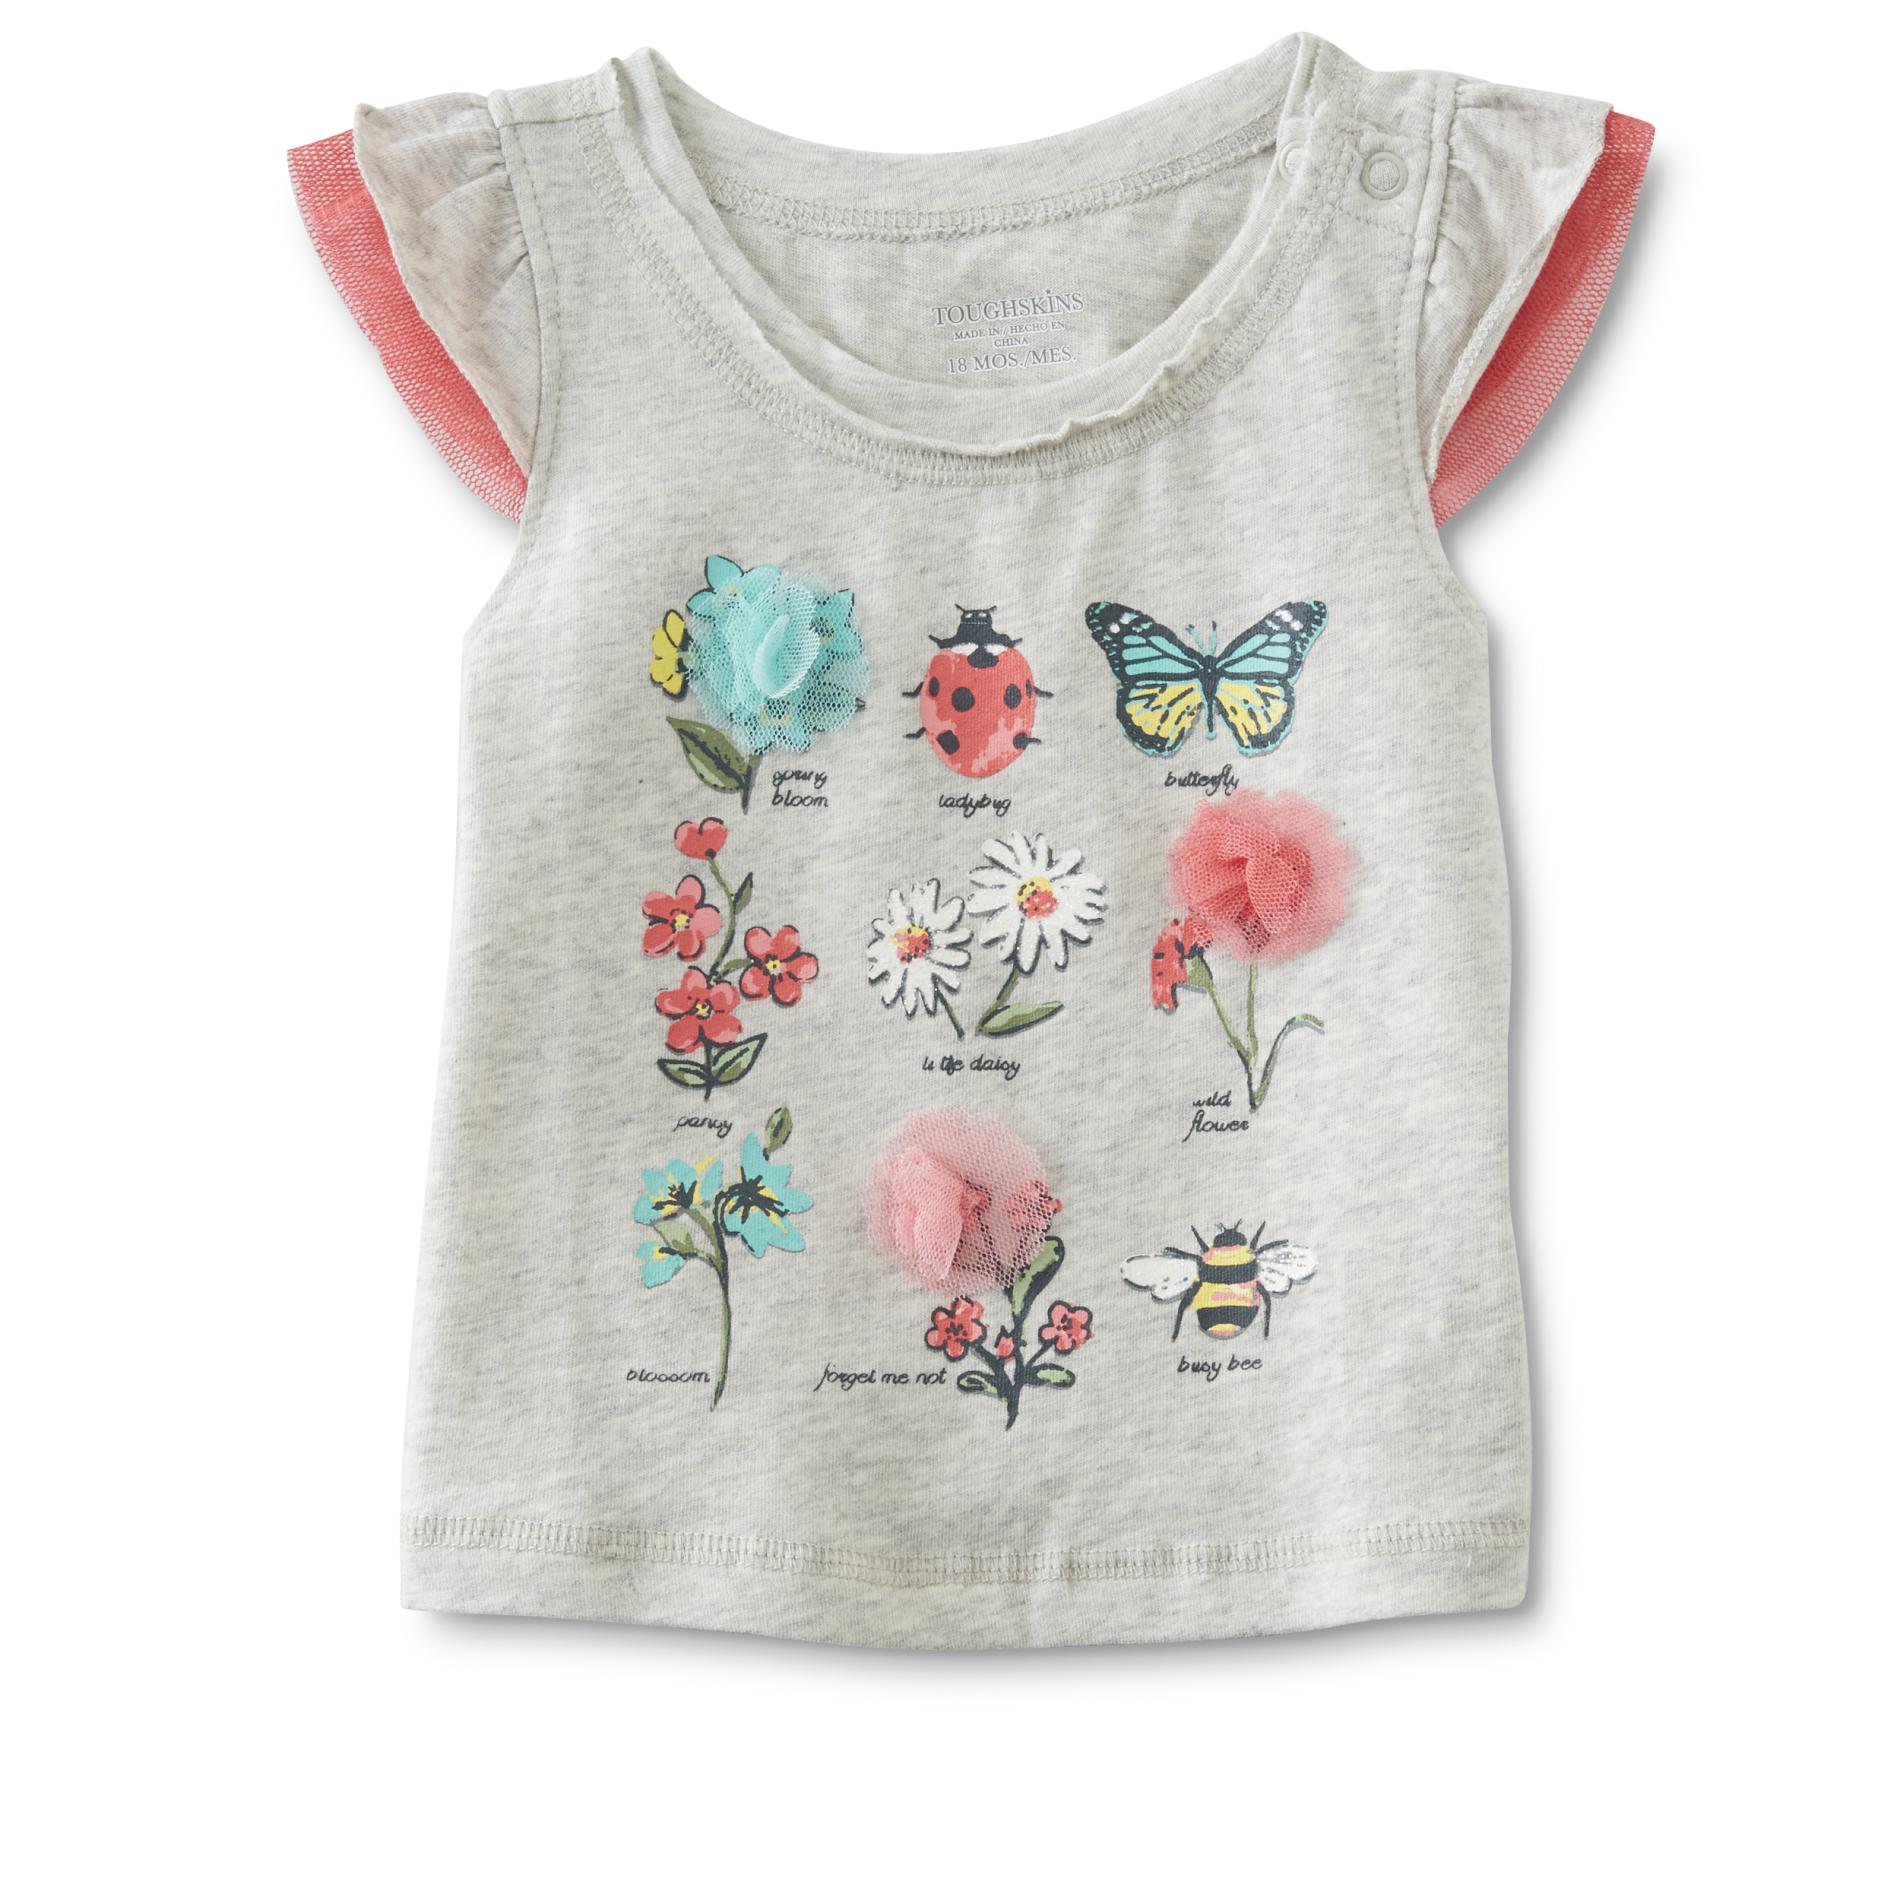 Toughskins Infant & Toddler Girl's Sleeveless Top - Floral